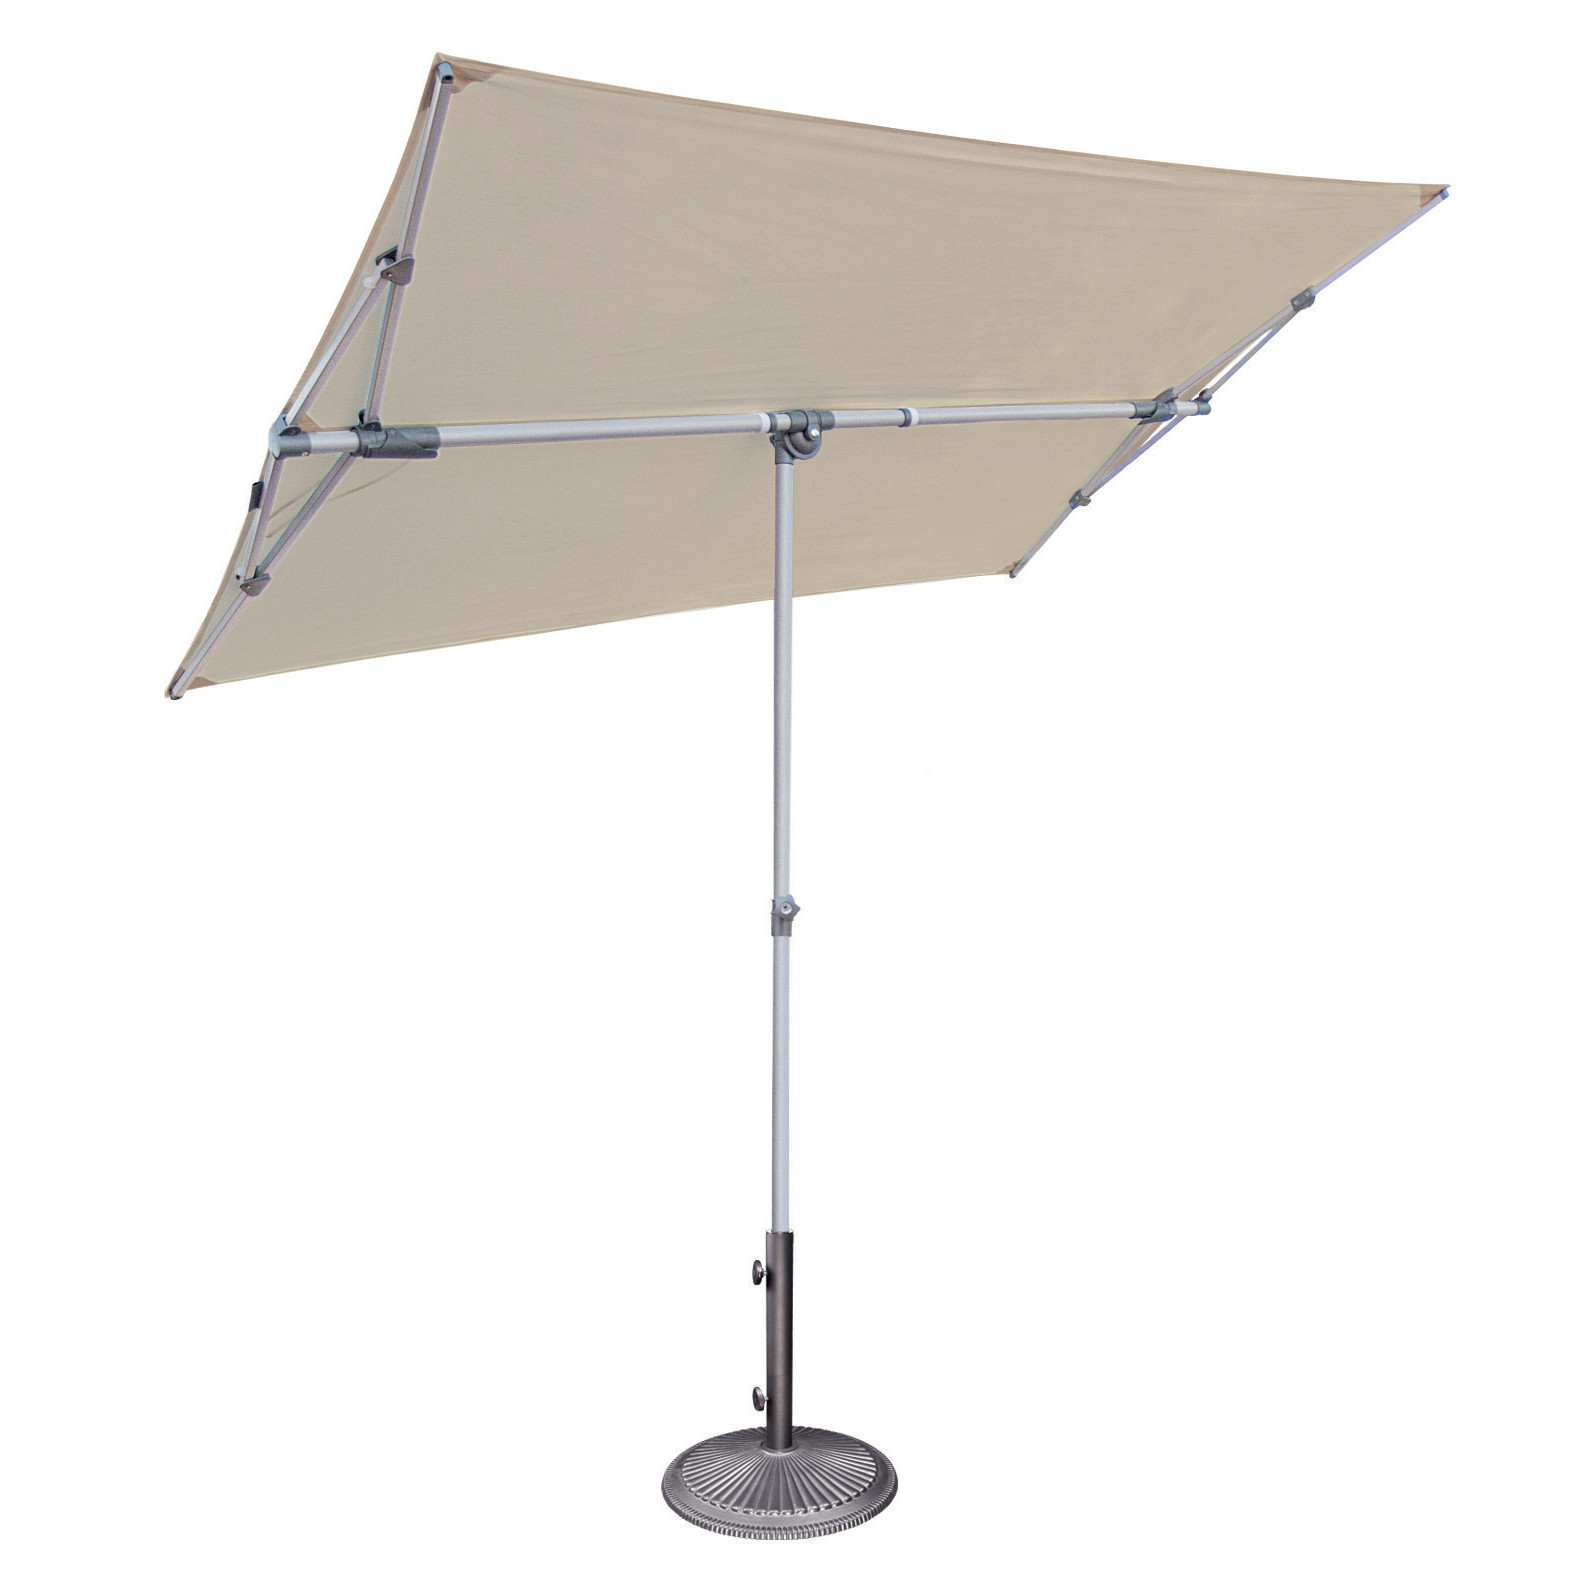 Best ideas about Rectangle Patio Umbrella
. Save or Pin SimplyShade 5 x 7 Rectangular Market Umbrella & Reviews Now.